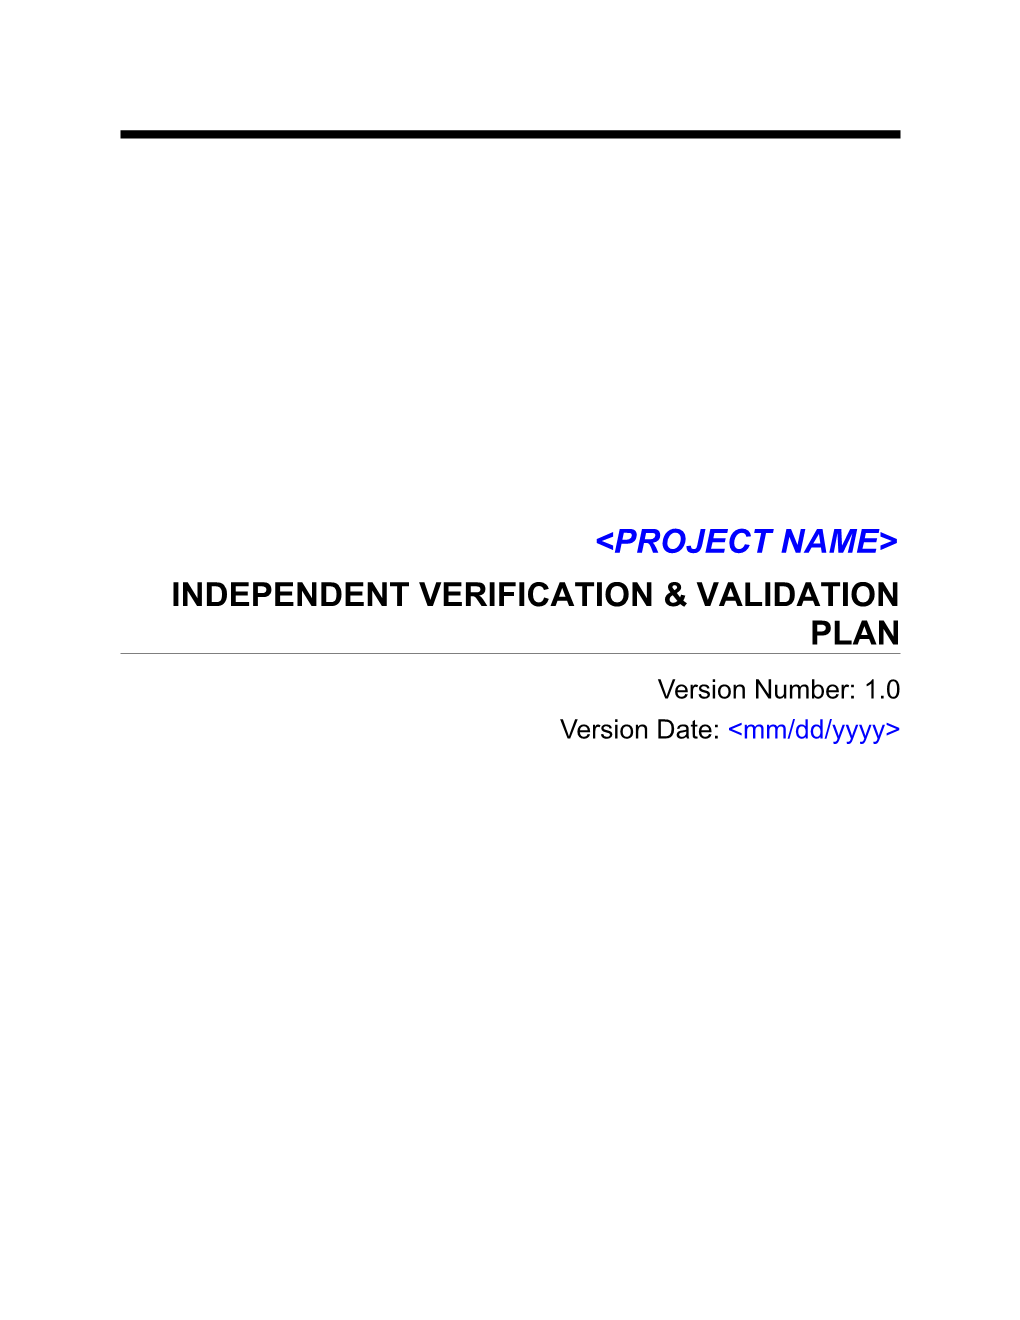 Independent Verification & Validation